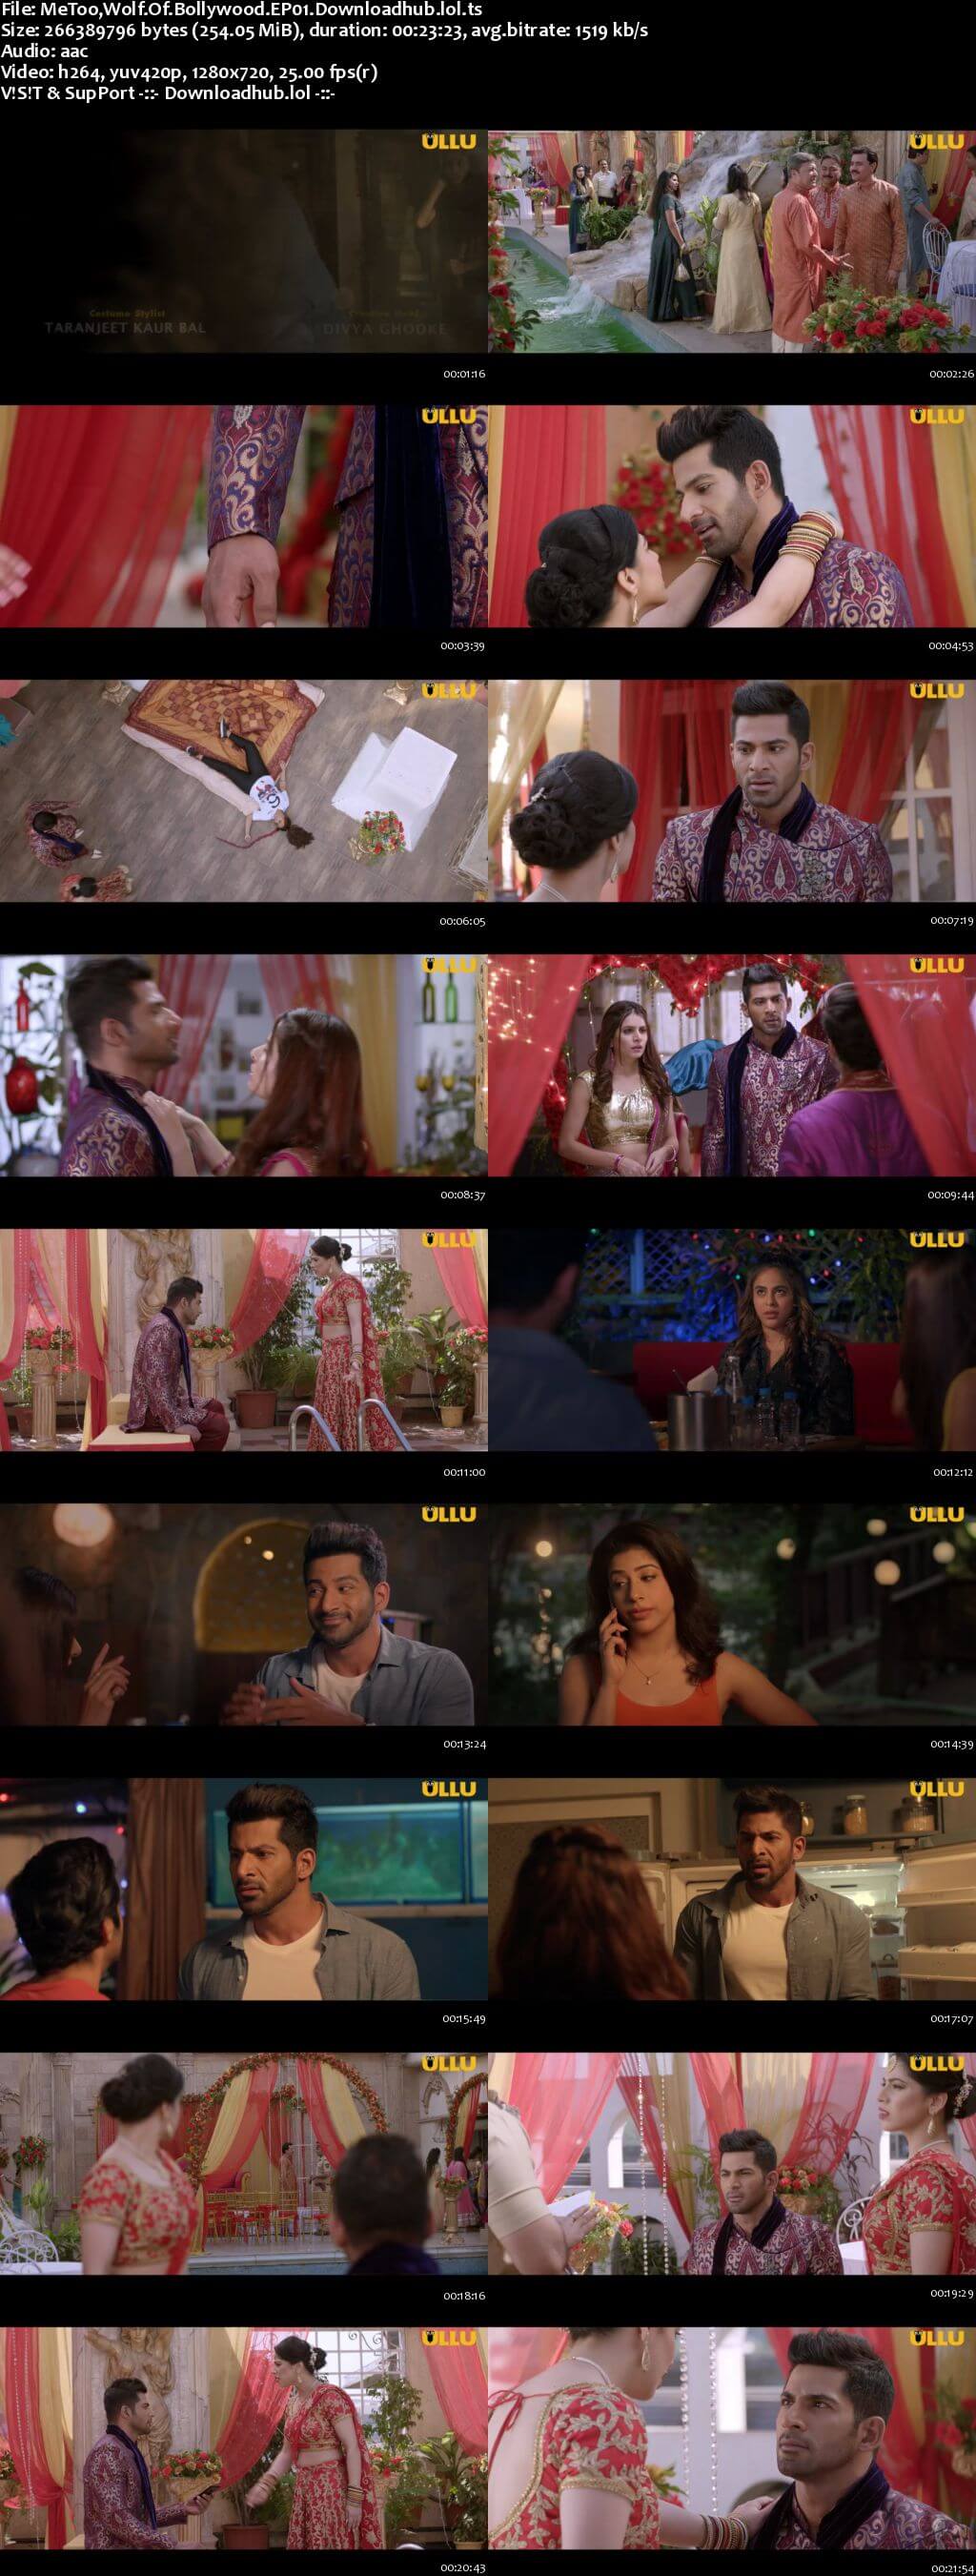 MeToo Wolf Of Bollywood 2019 Hindi S01 ULLU WEB Series Complete 720p HDRip x264